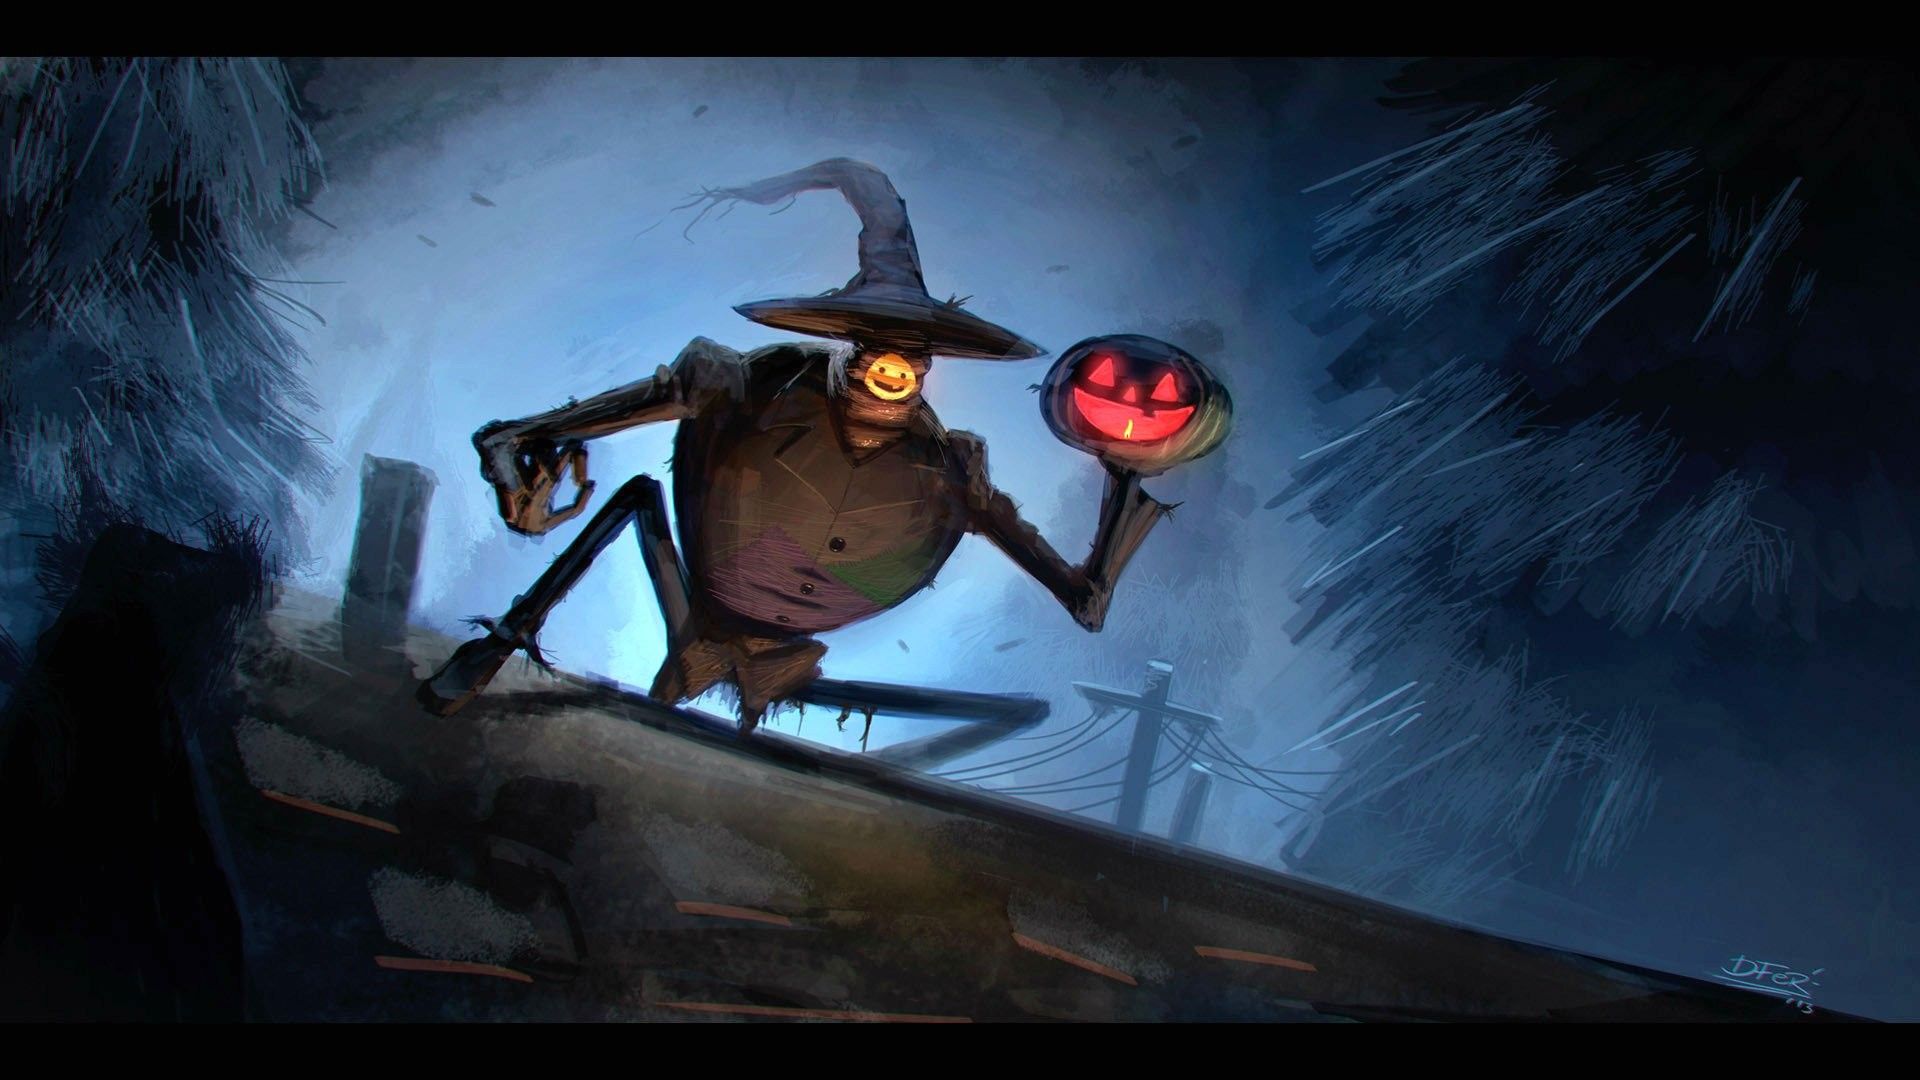 Animated, Cartoon Halloween Wallpaper, Family, Disney, gravity, HD Halloween, Free, Series, Falls, Comedy